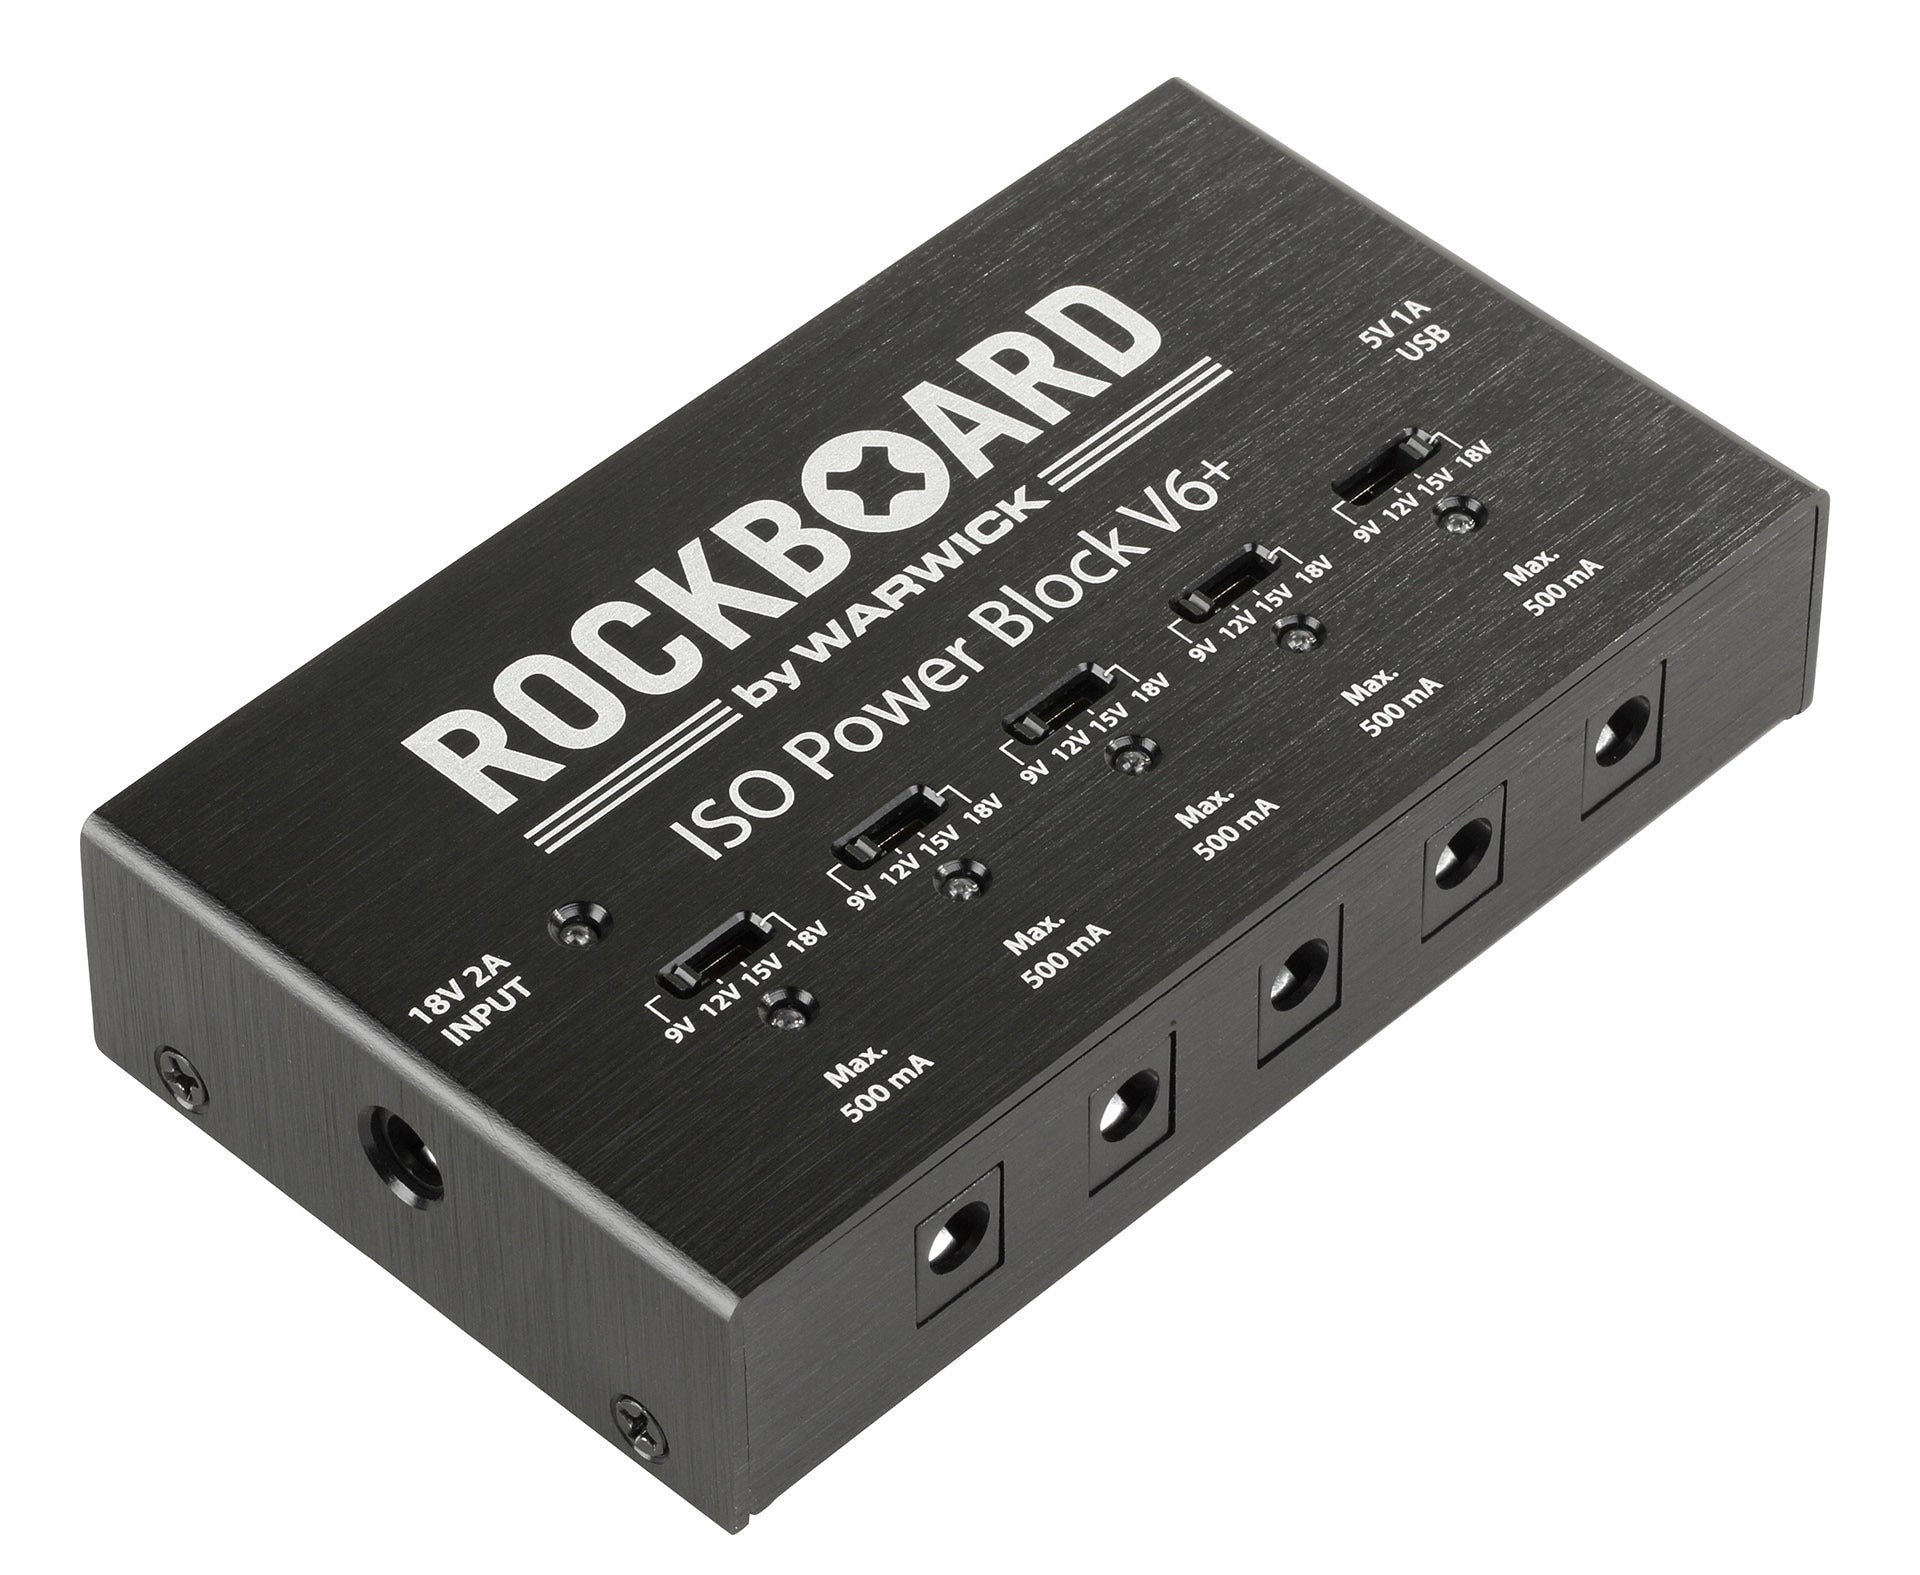 RockBoard ISO Power Block | V6+